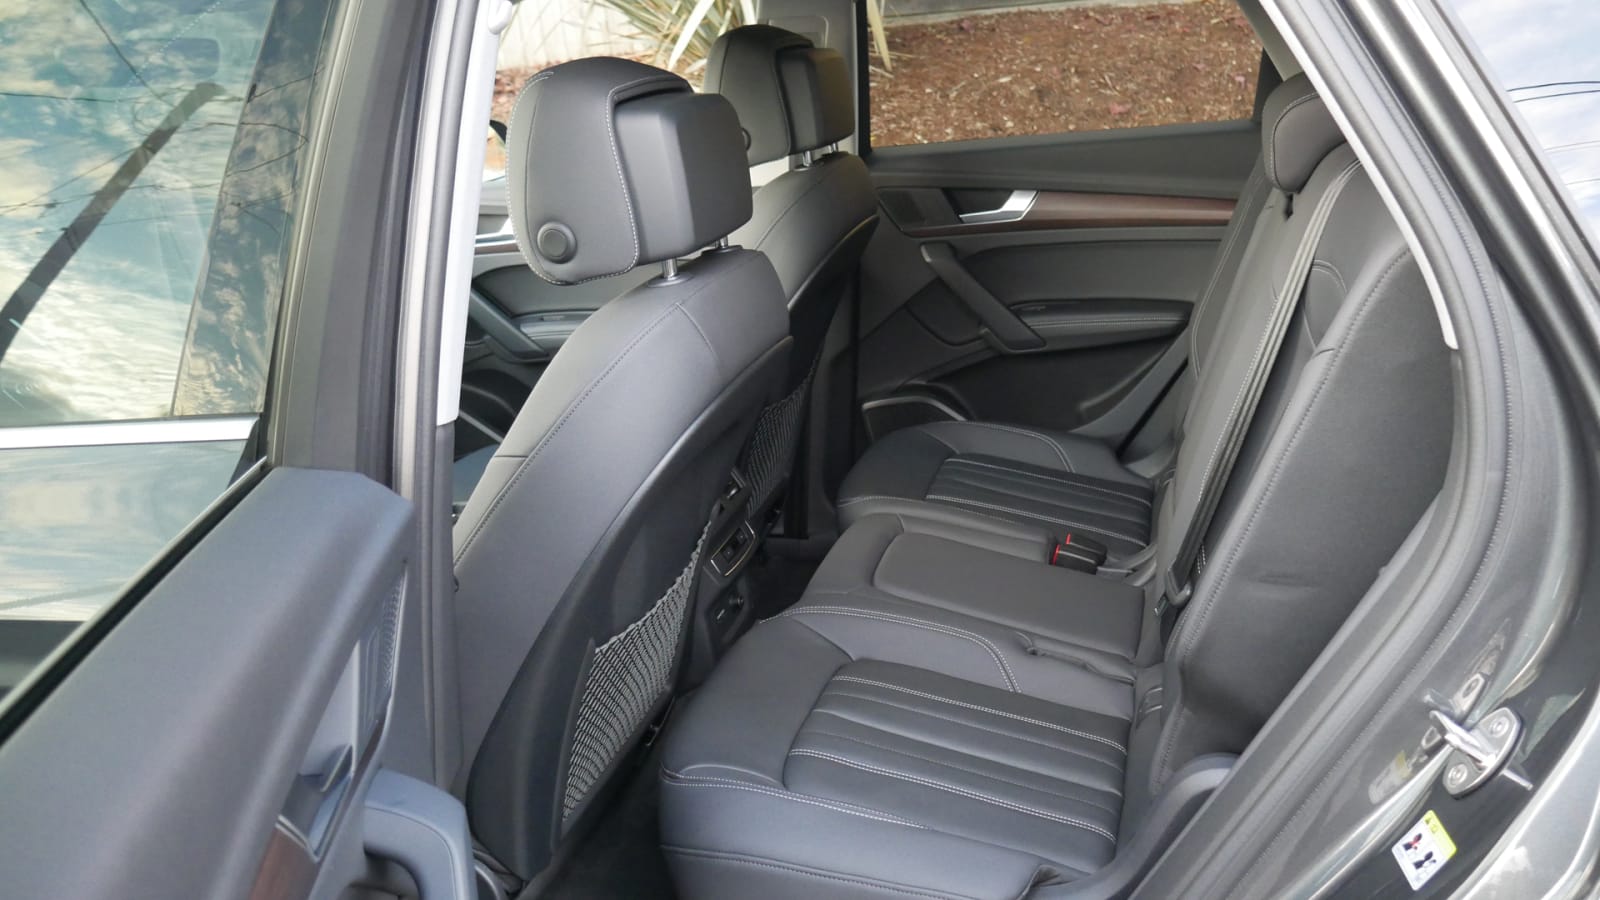 2021 Audi Q5 luggage test seats full forward